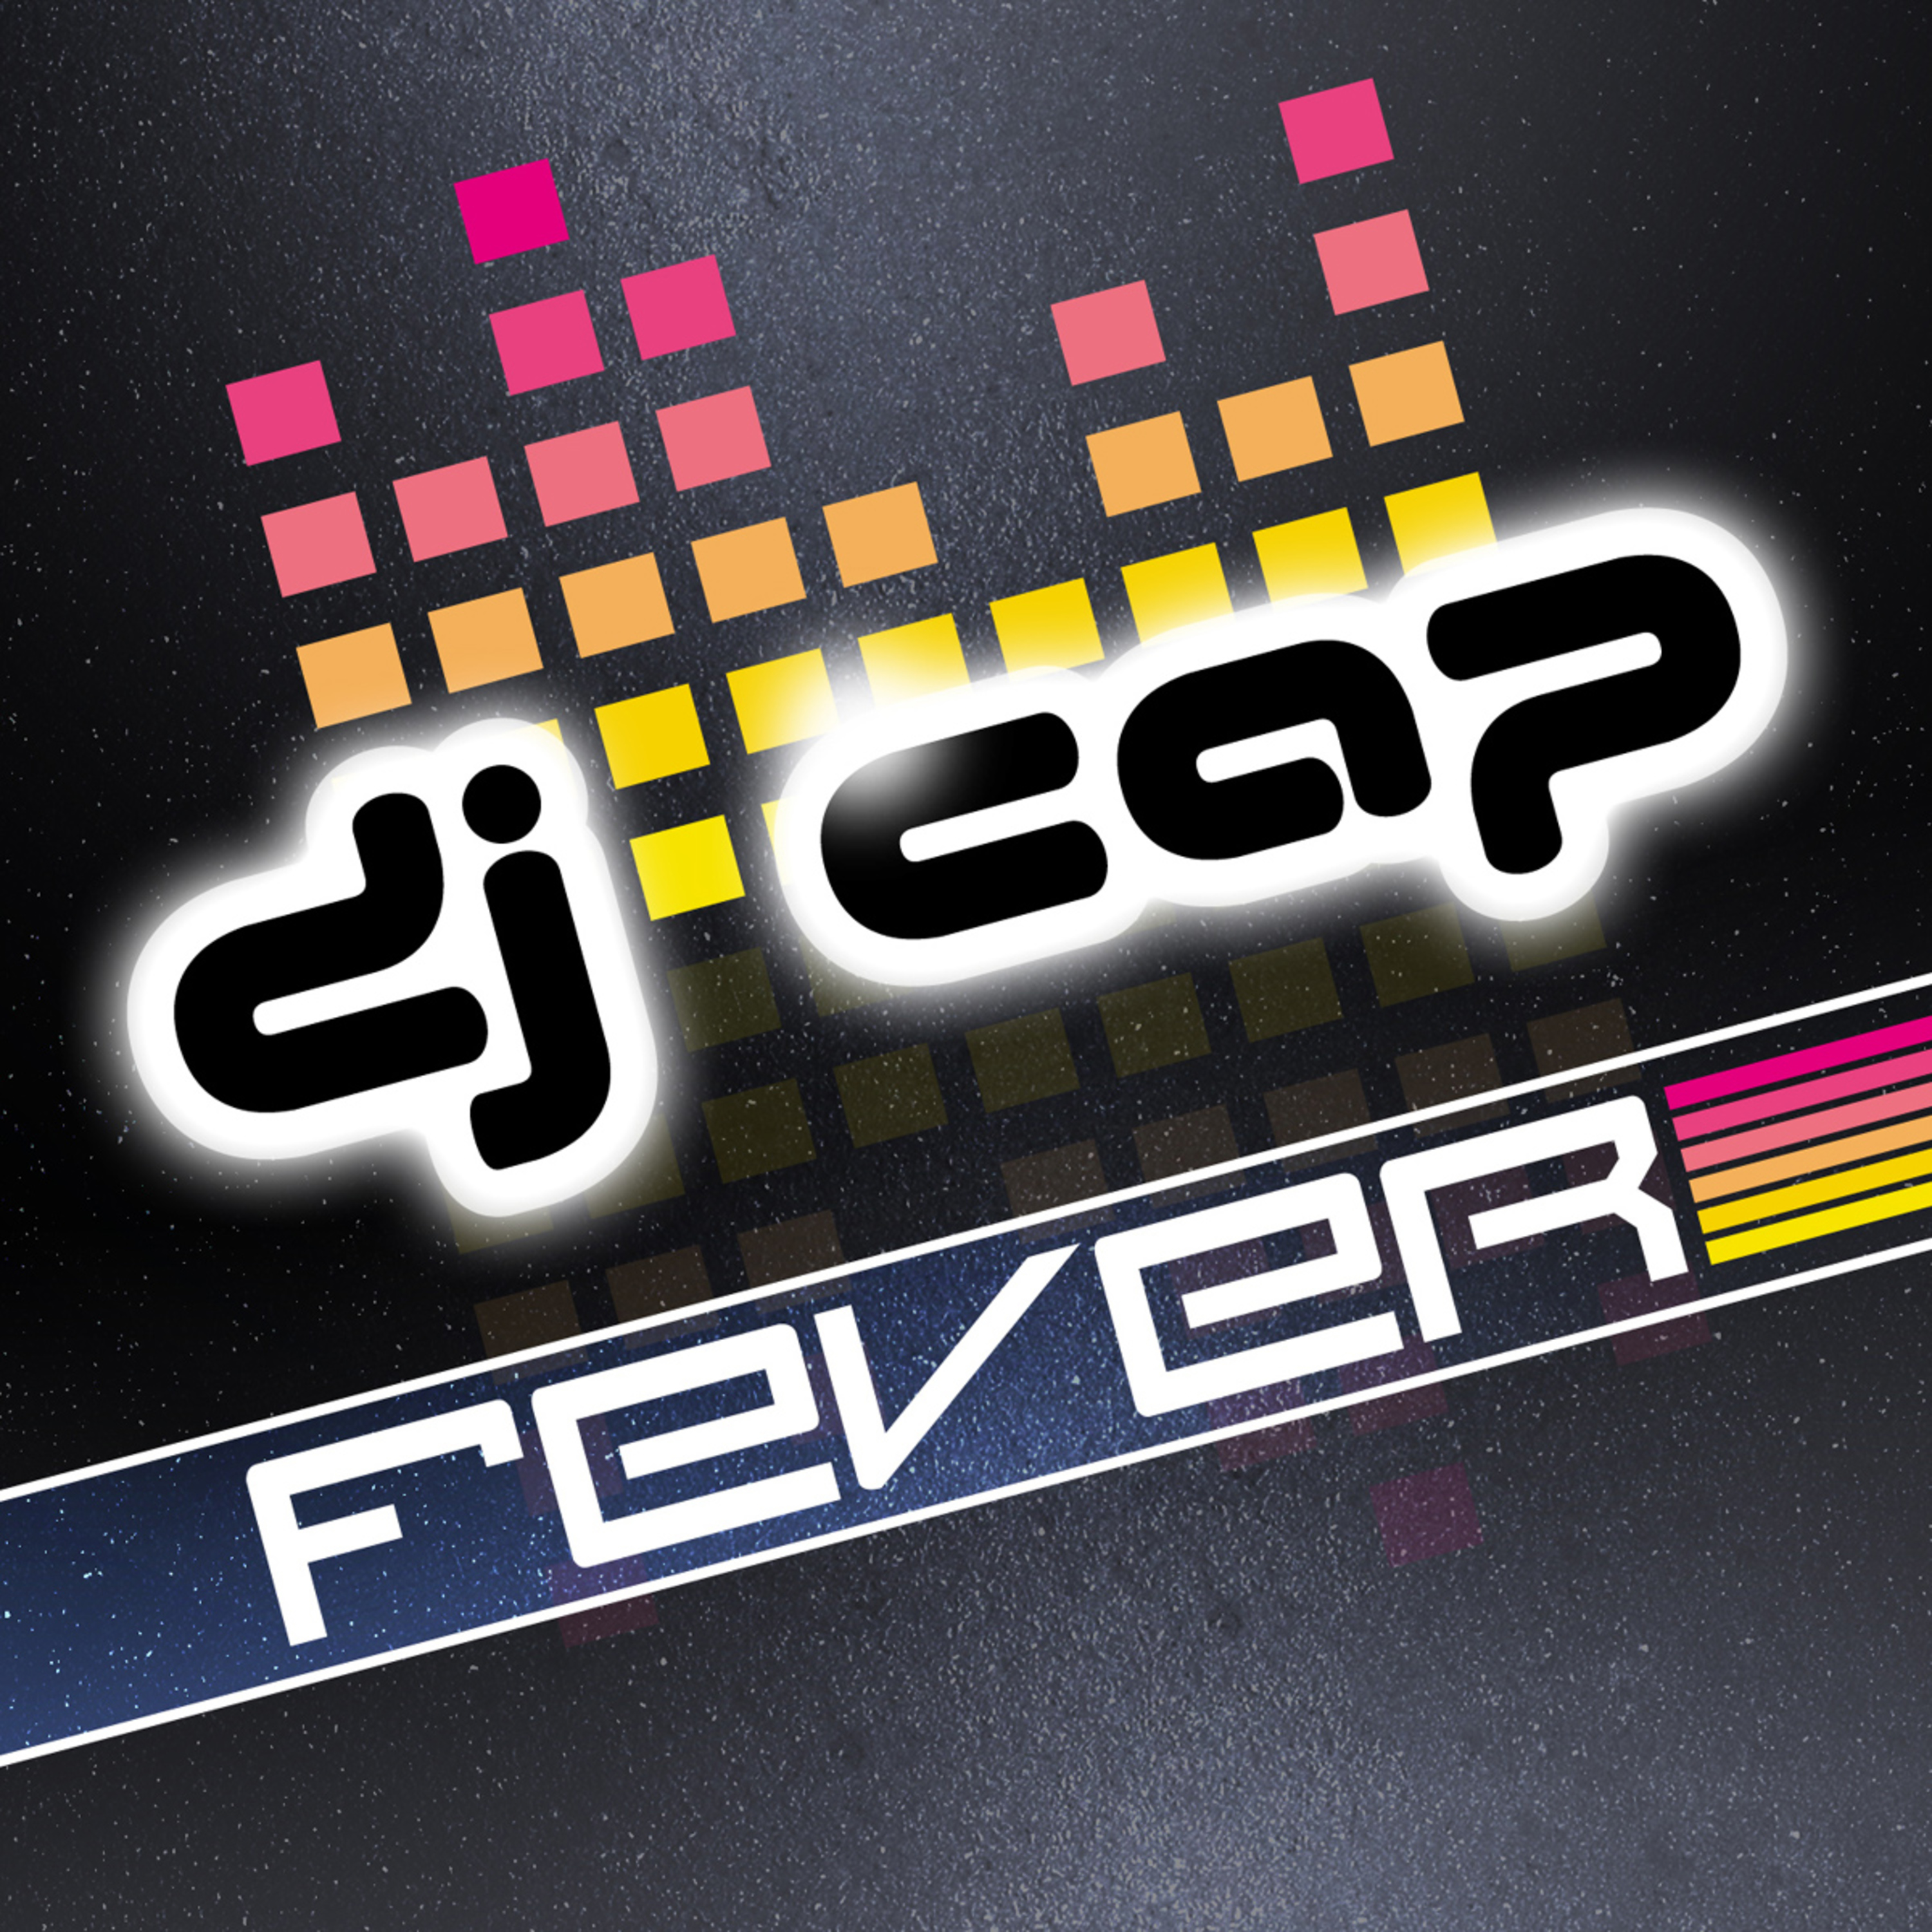 Fever (e-Strella Remix)